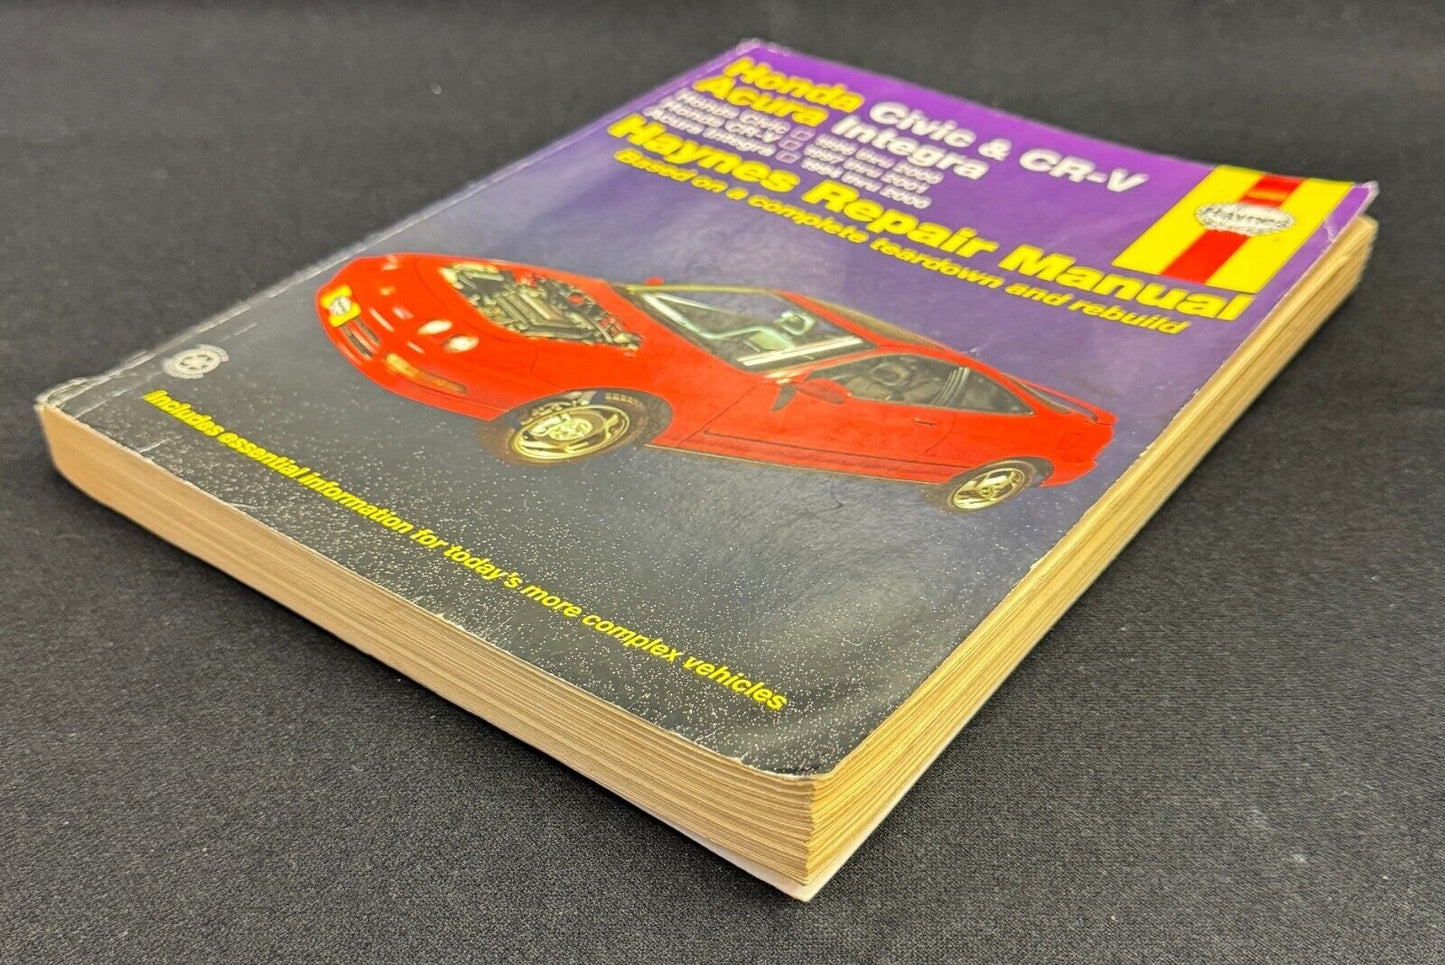 1996-2001 Honda Civic CRV CR-V Integra Repair Service Workshop Manual Book5826